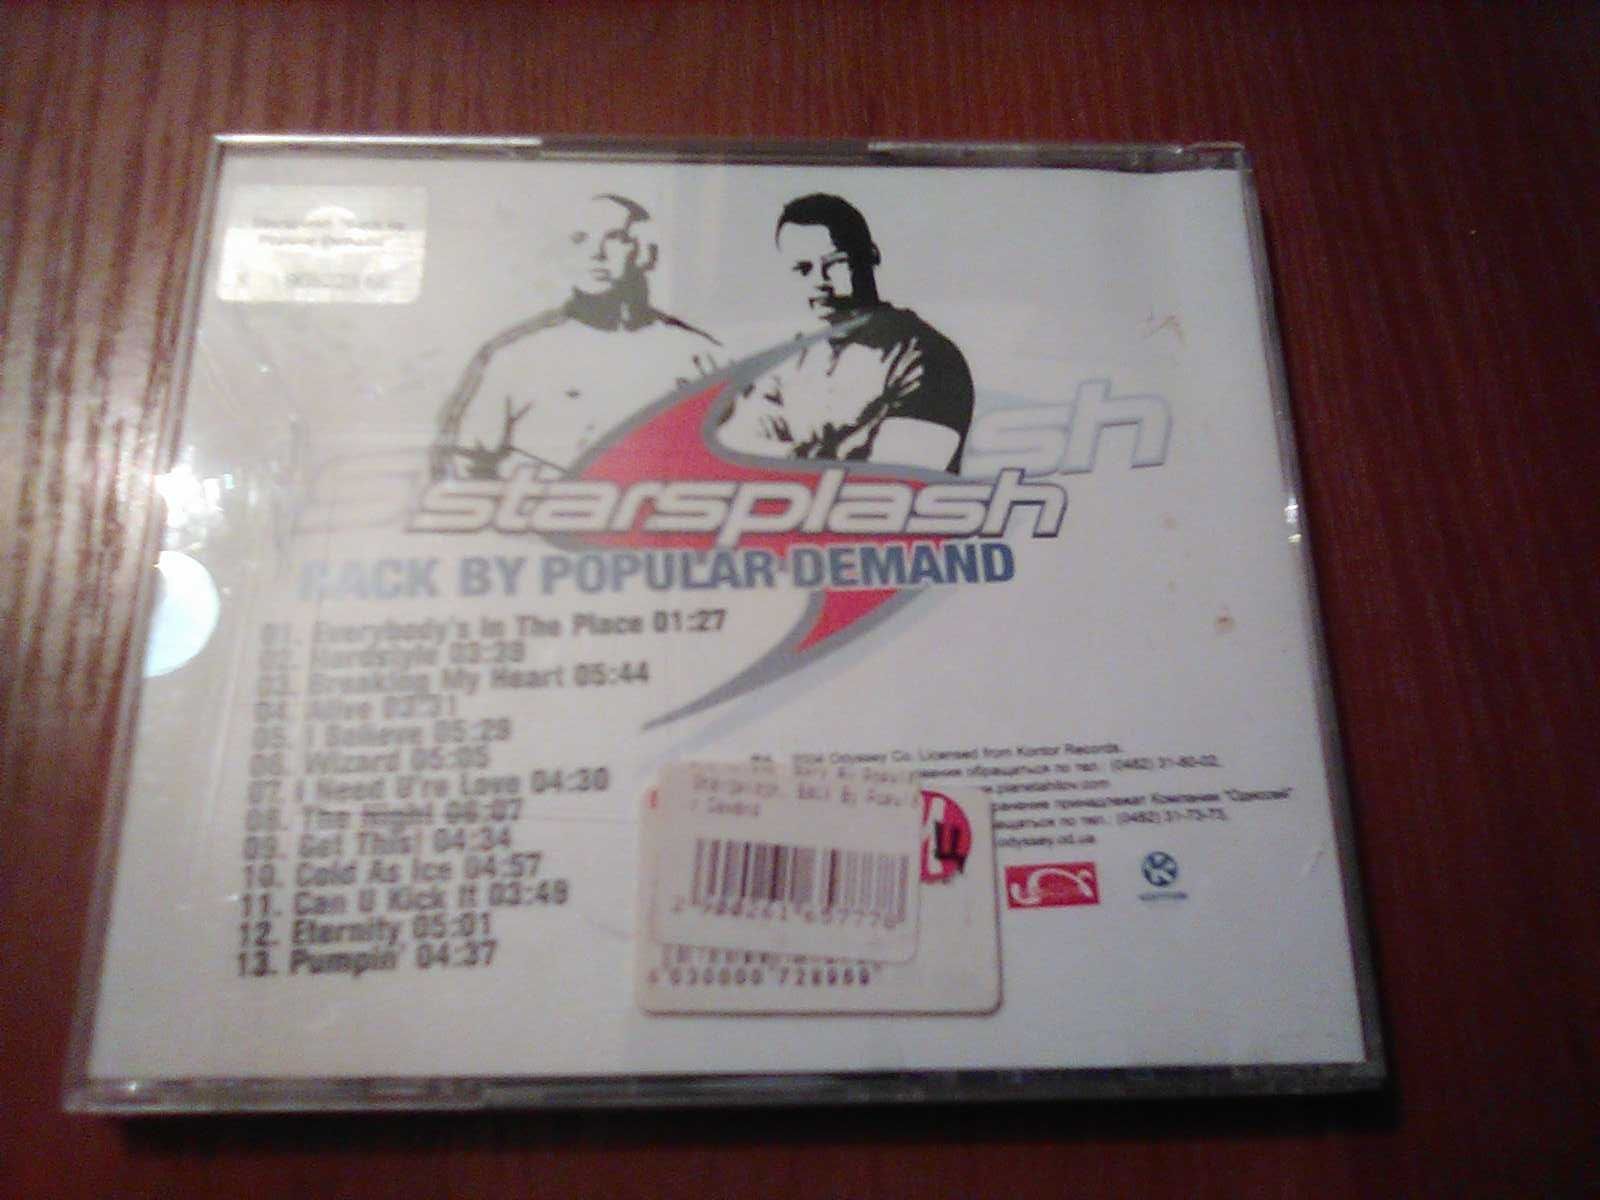 Музыкальный CD Starsplash альбом Back by popular demand 2004 год